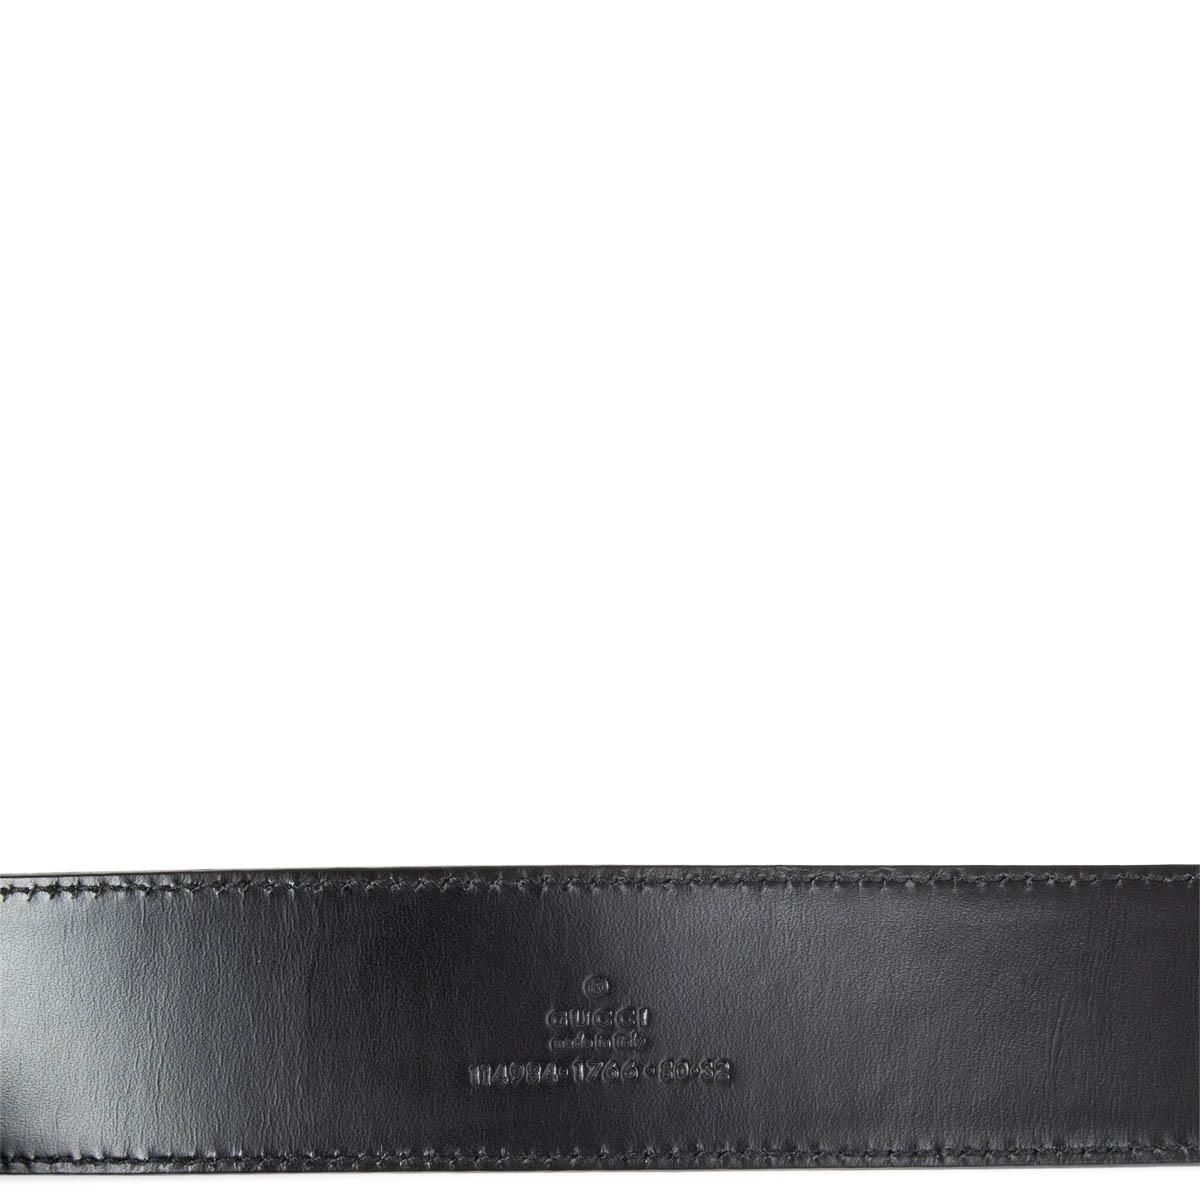 Black GUCCI black leather SIGNATURE WEB INTERLOCKING G BUCKLE Belt 80 / 32